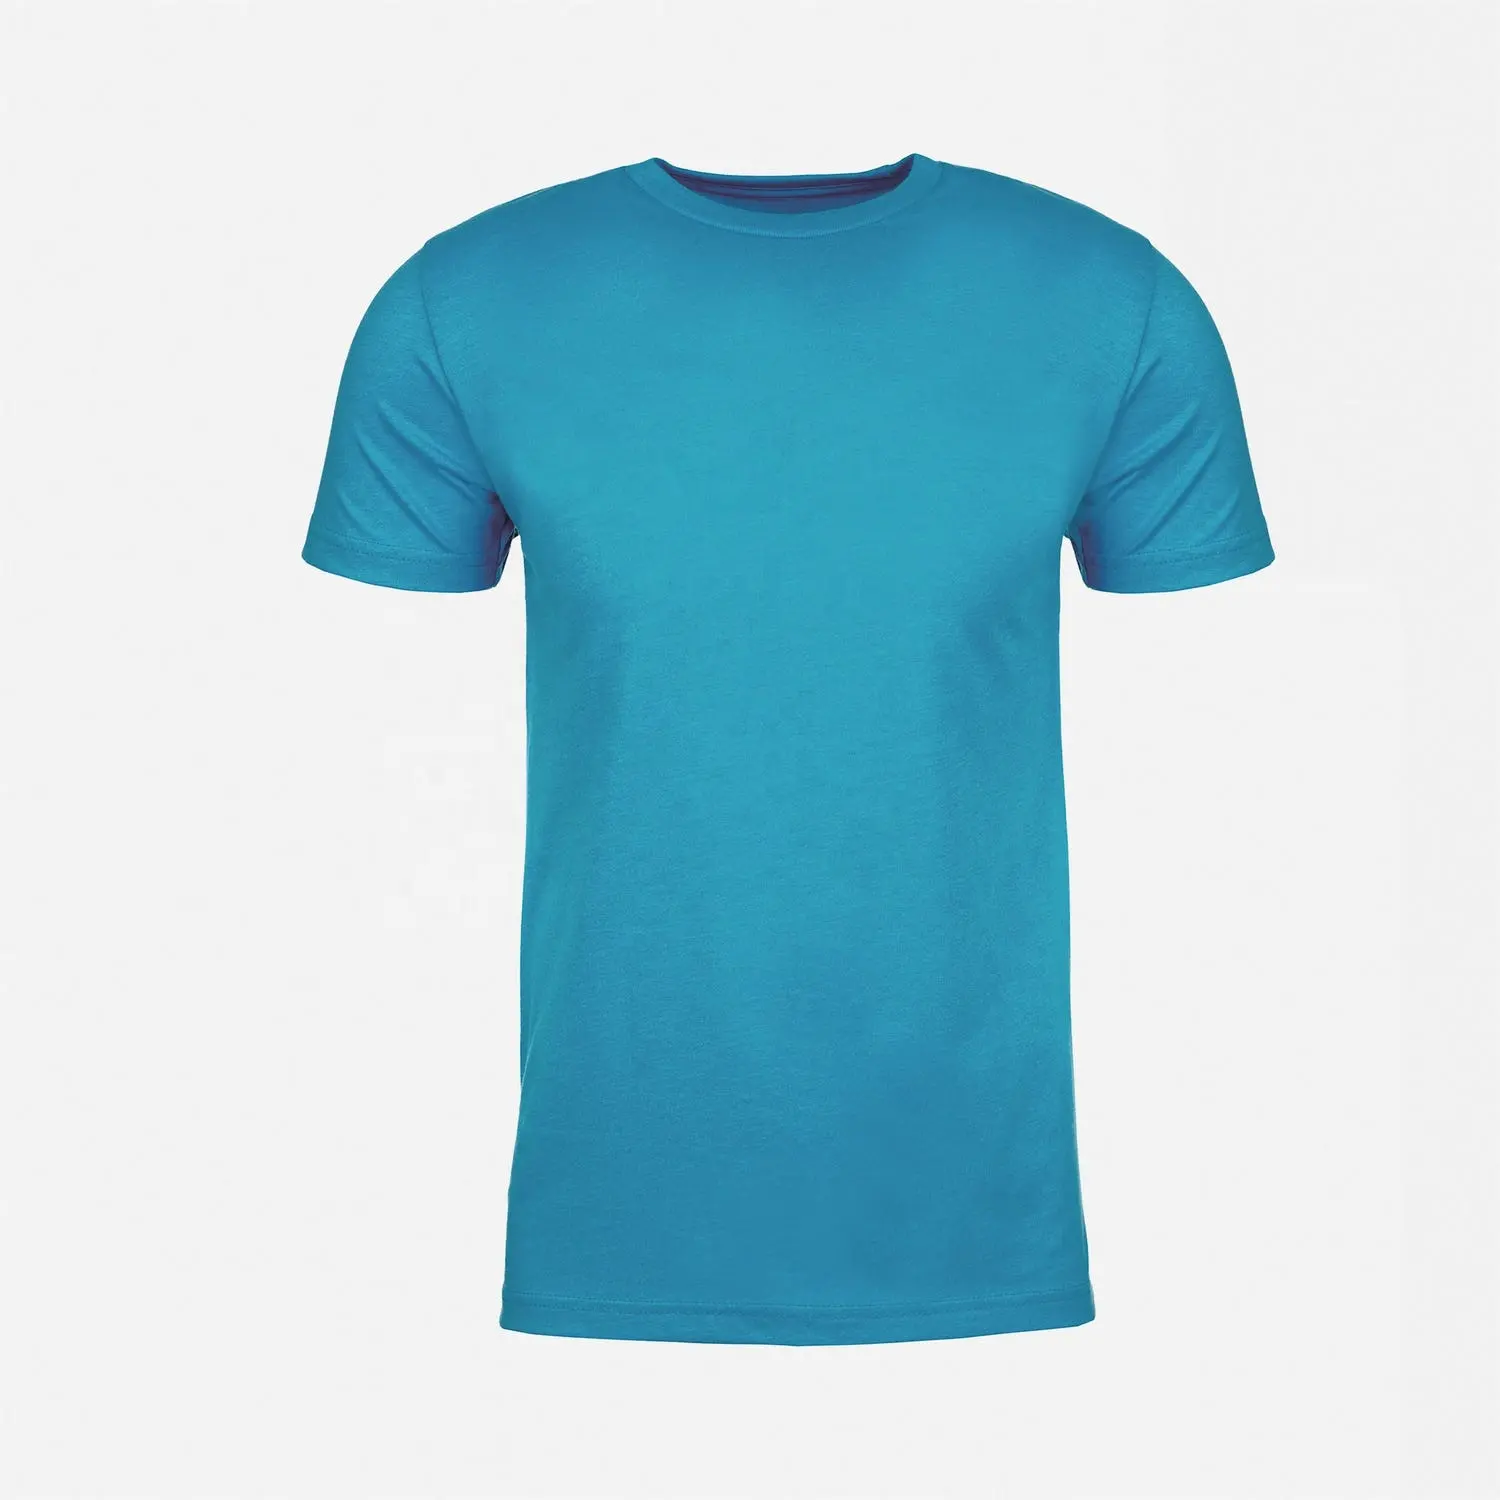 Alta calidad personalizada verano Unisex siguiente nivel ropa 6210 Unisex CVC camiseta turquesa en blanco transpirable camiseta